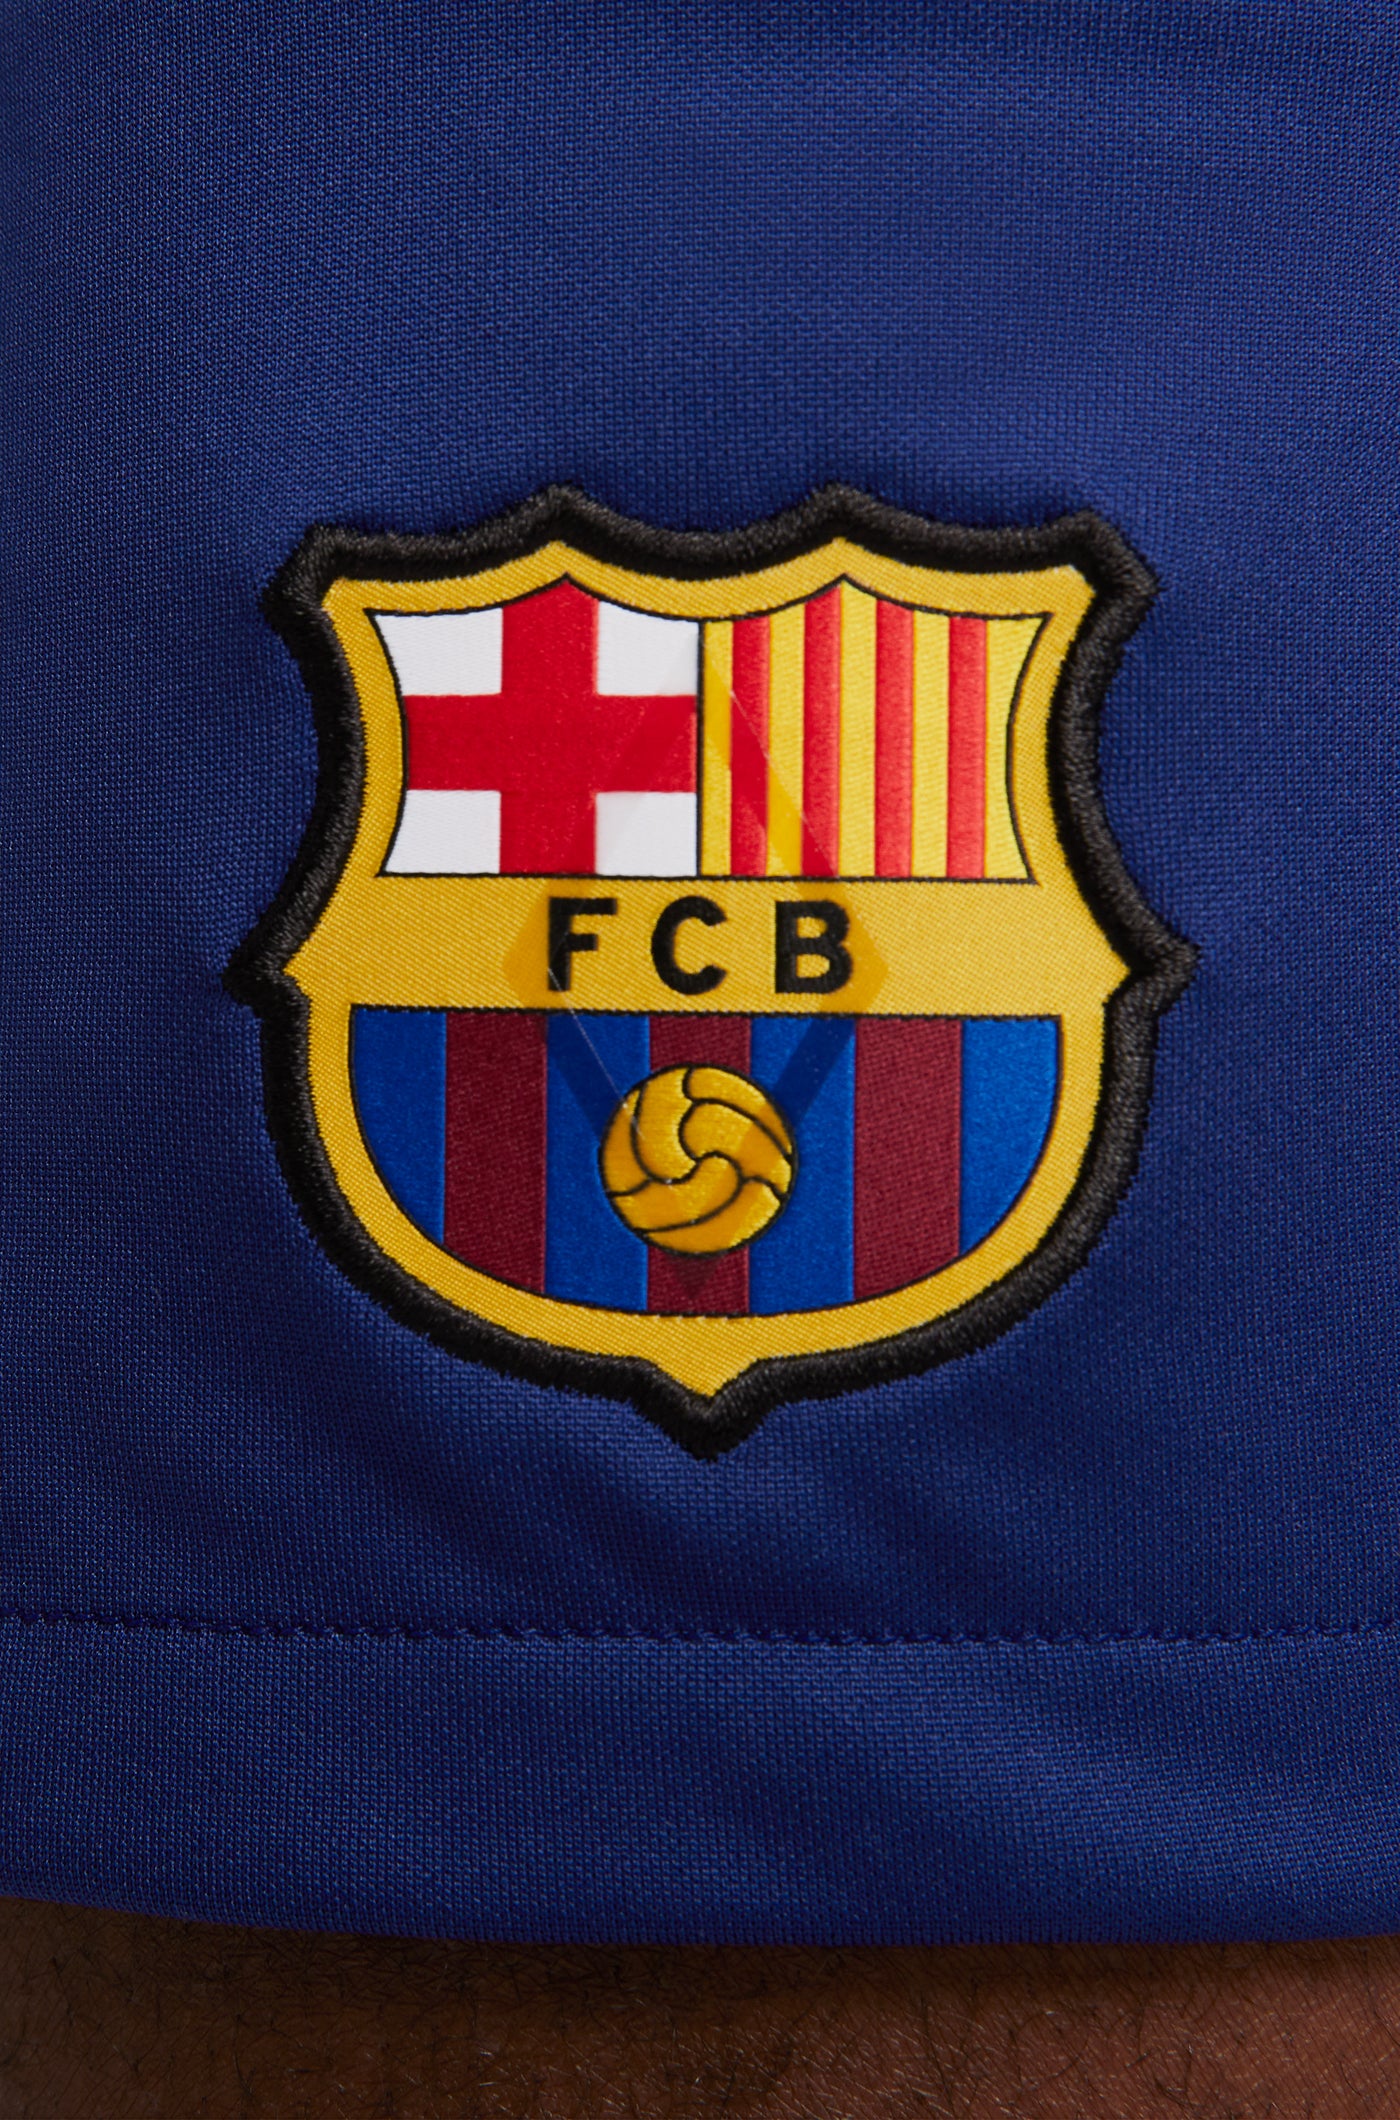 FC Barcelona home shorts 23/24